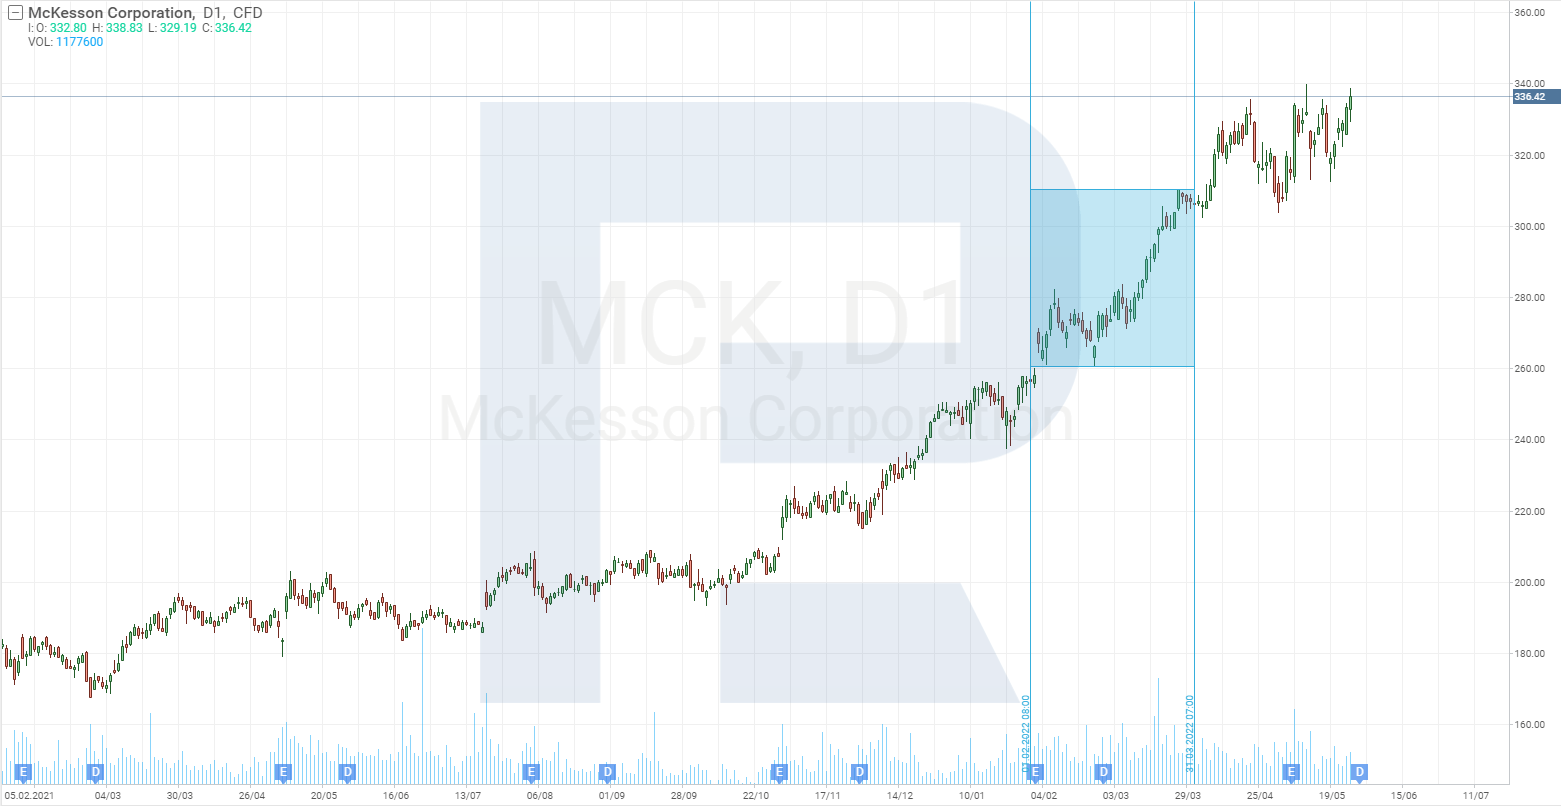 Bagan harga saham McKesson Corporation